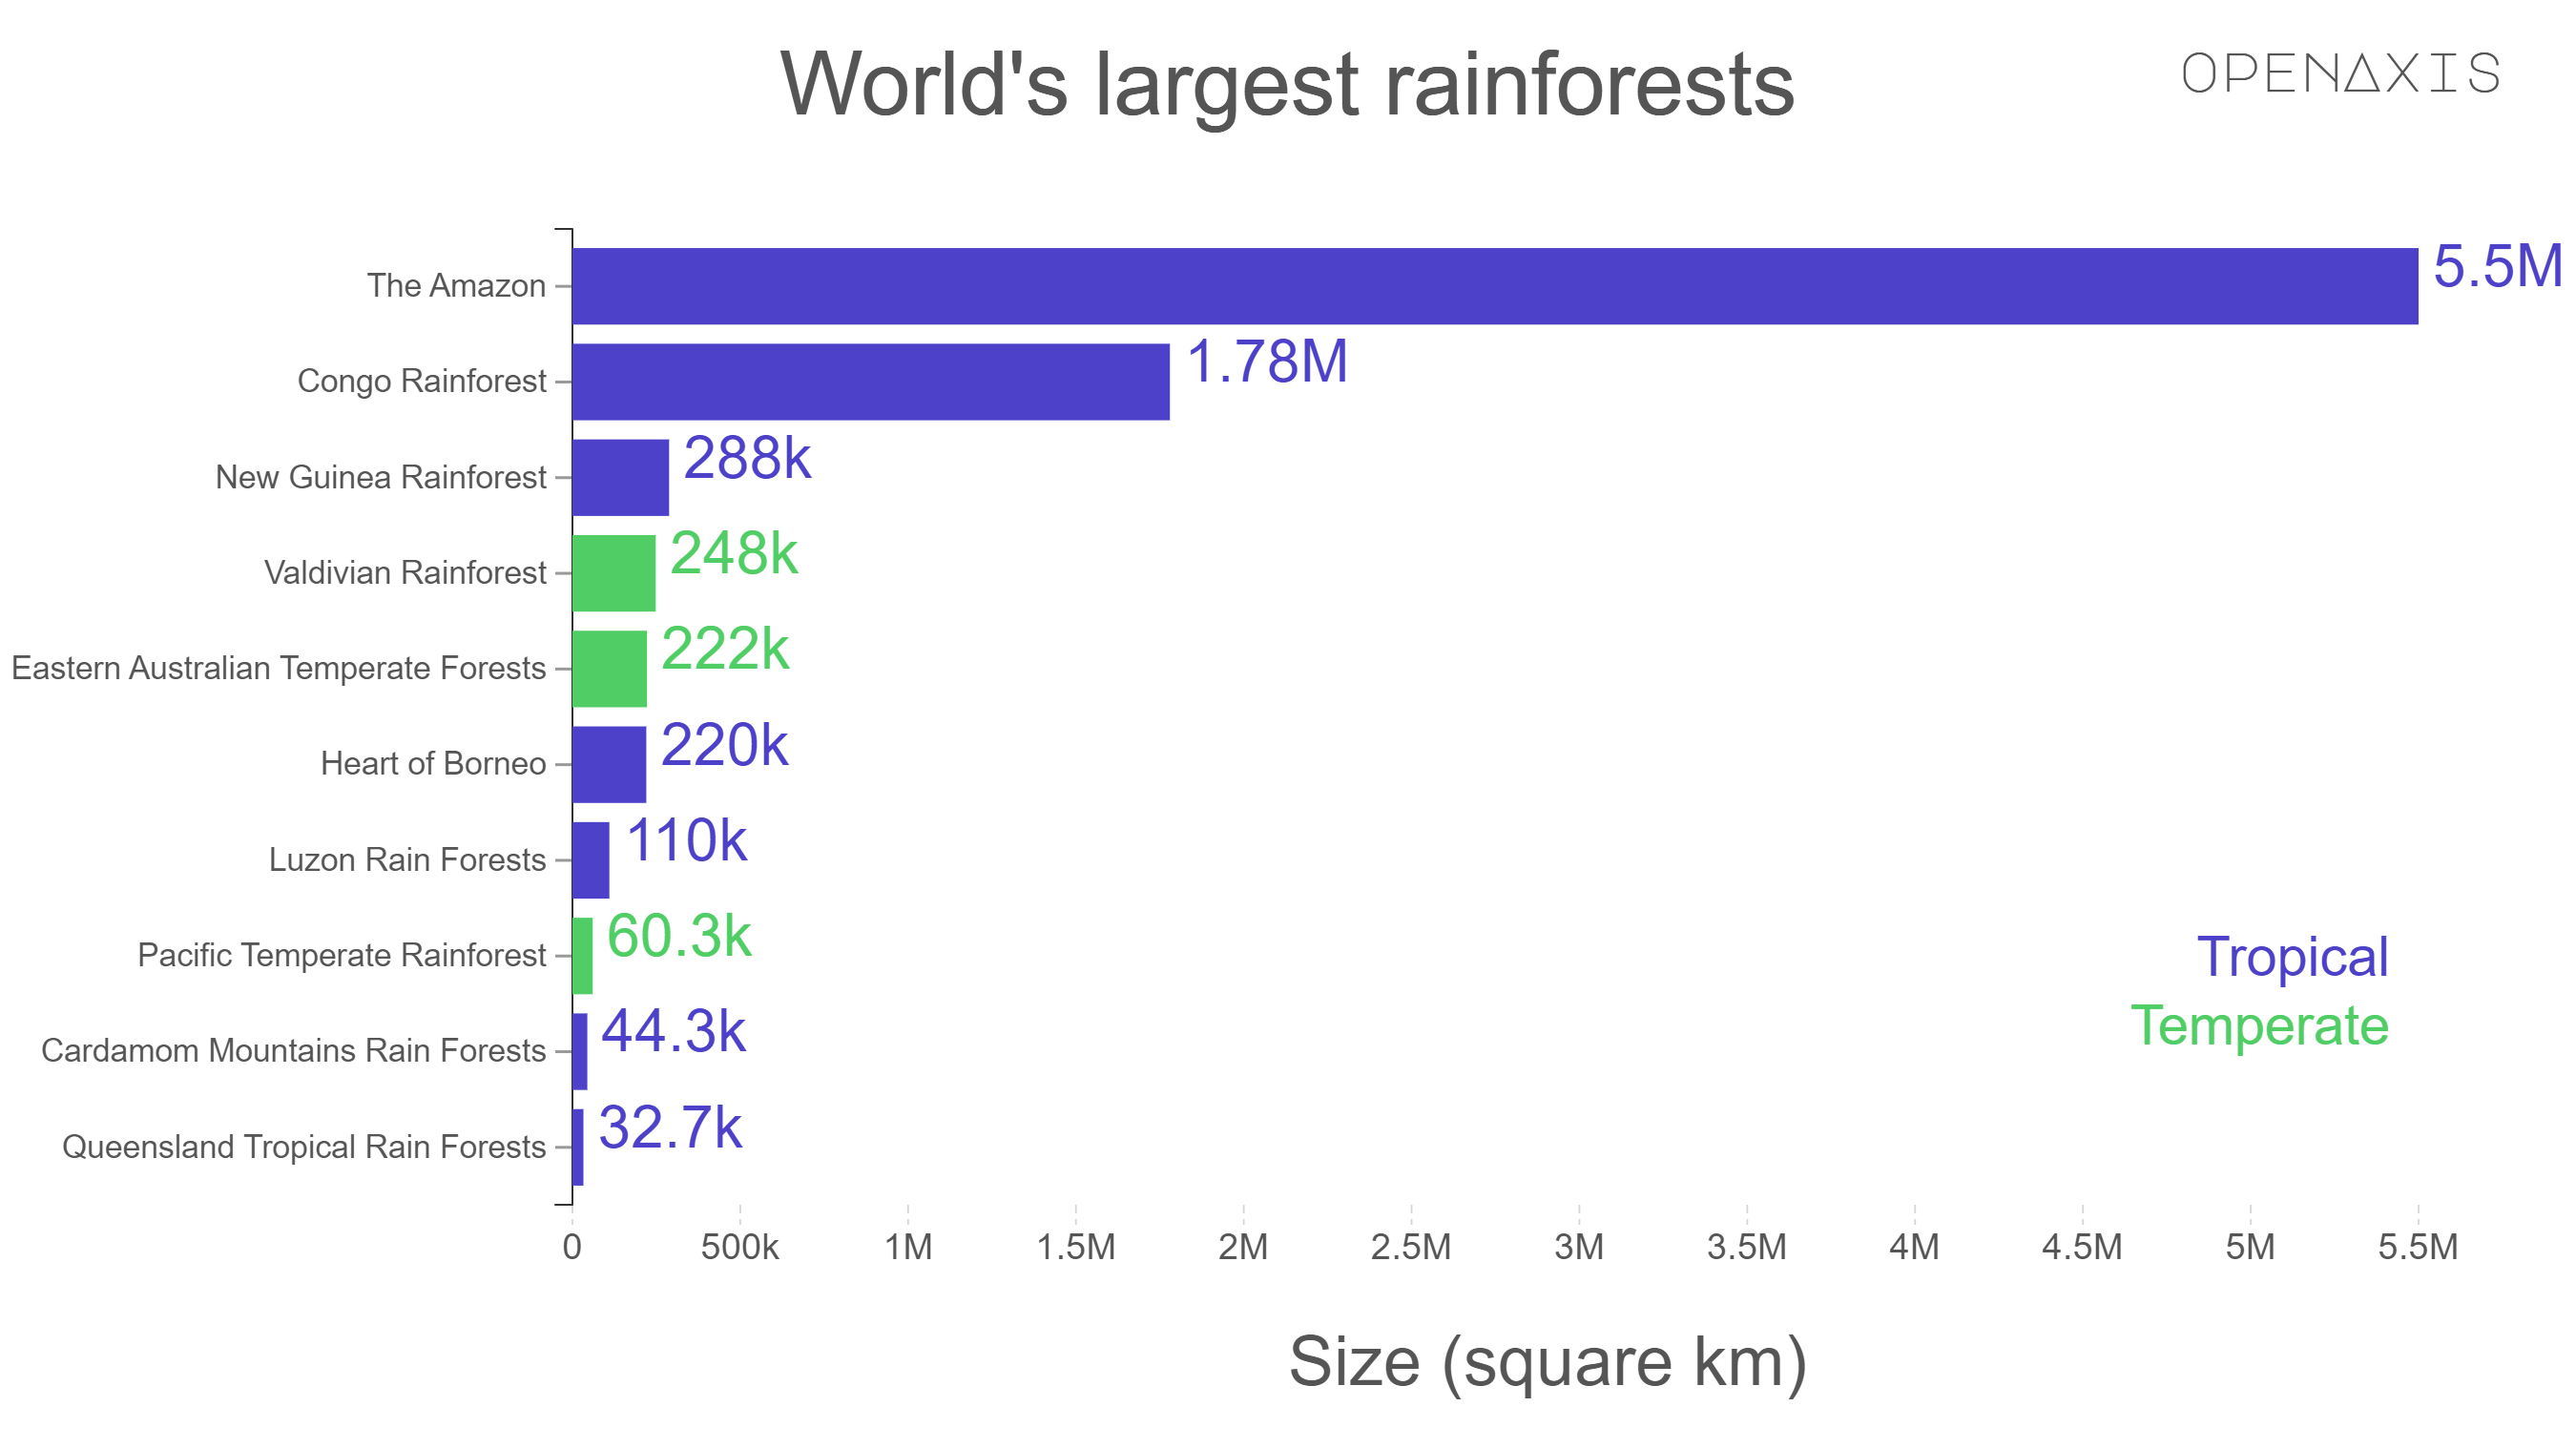 "World's largest rainforests"